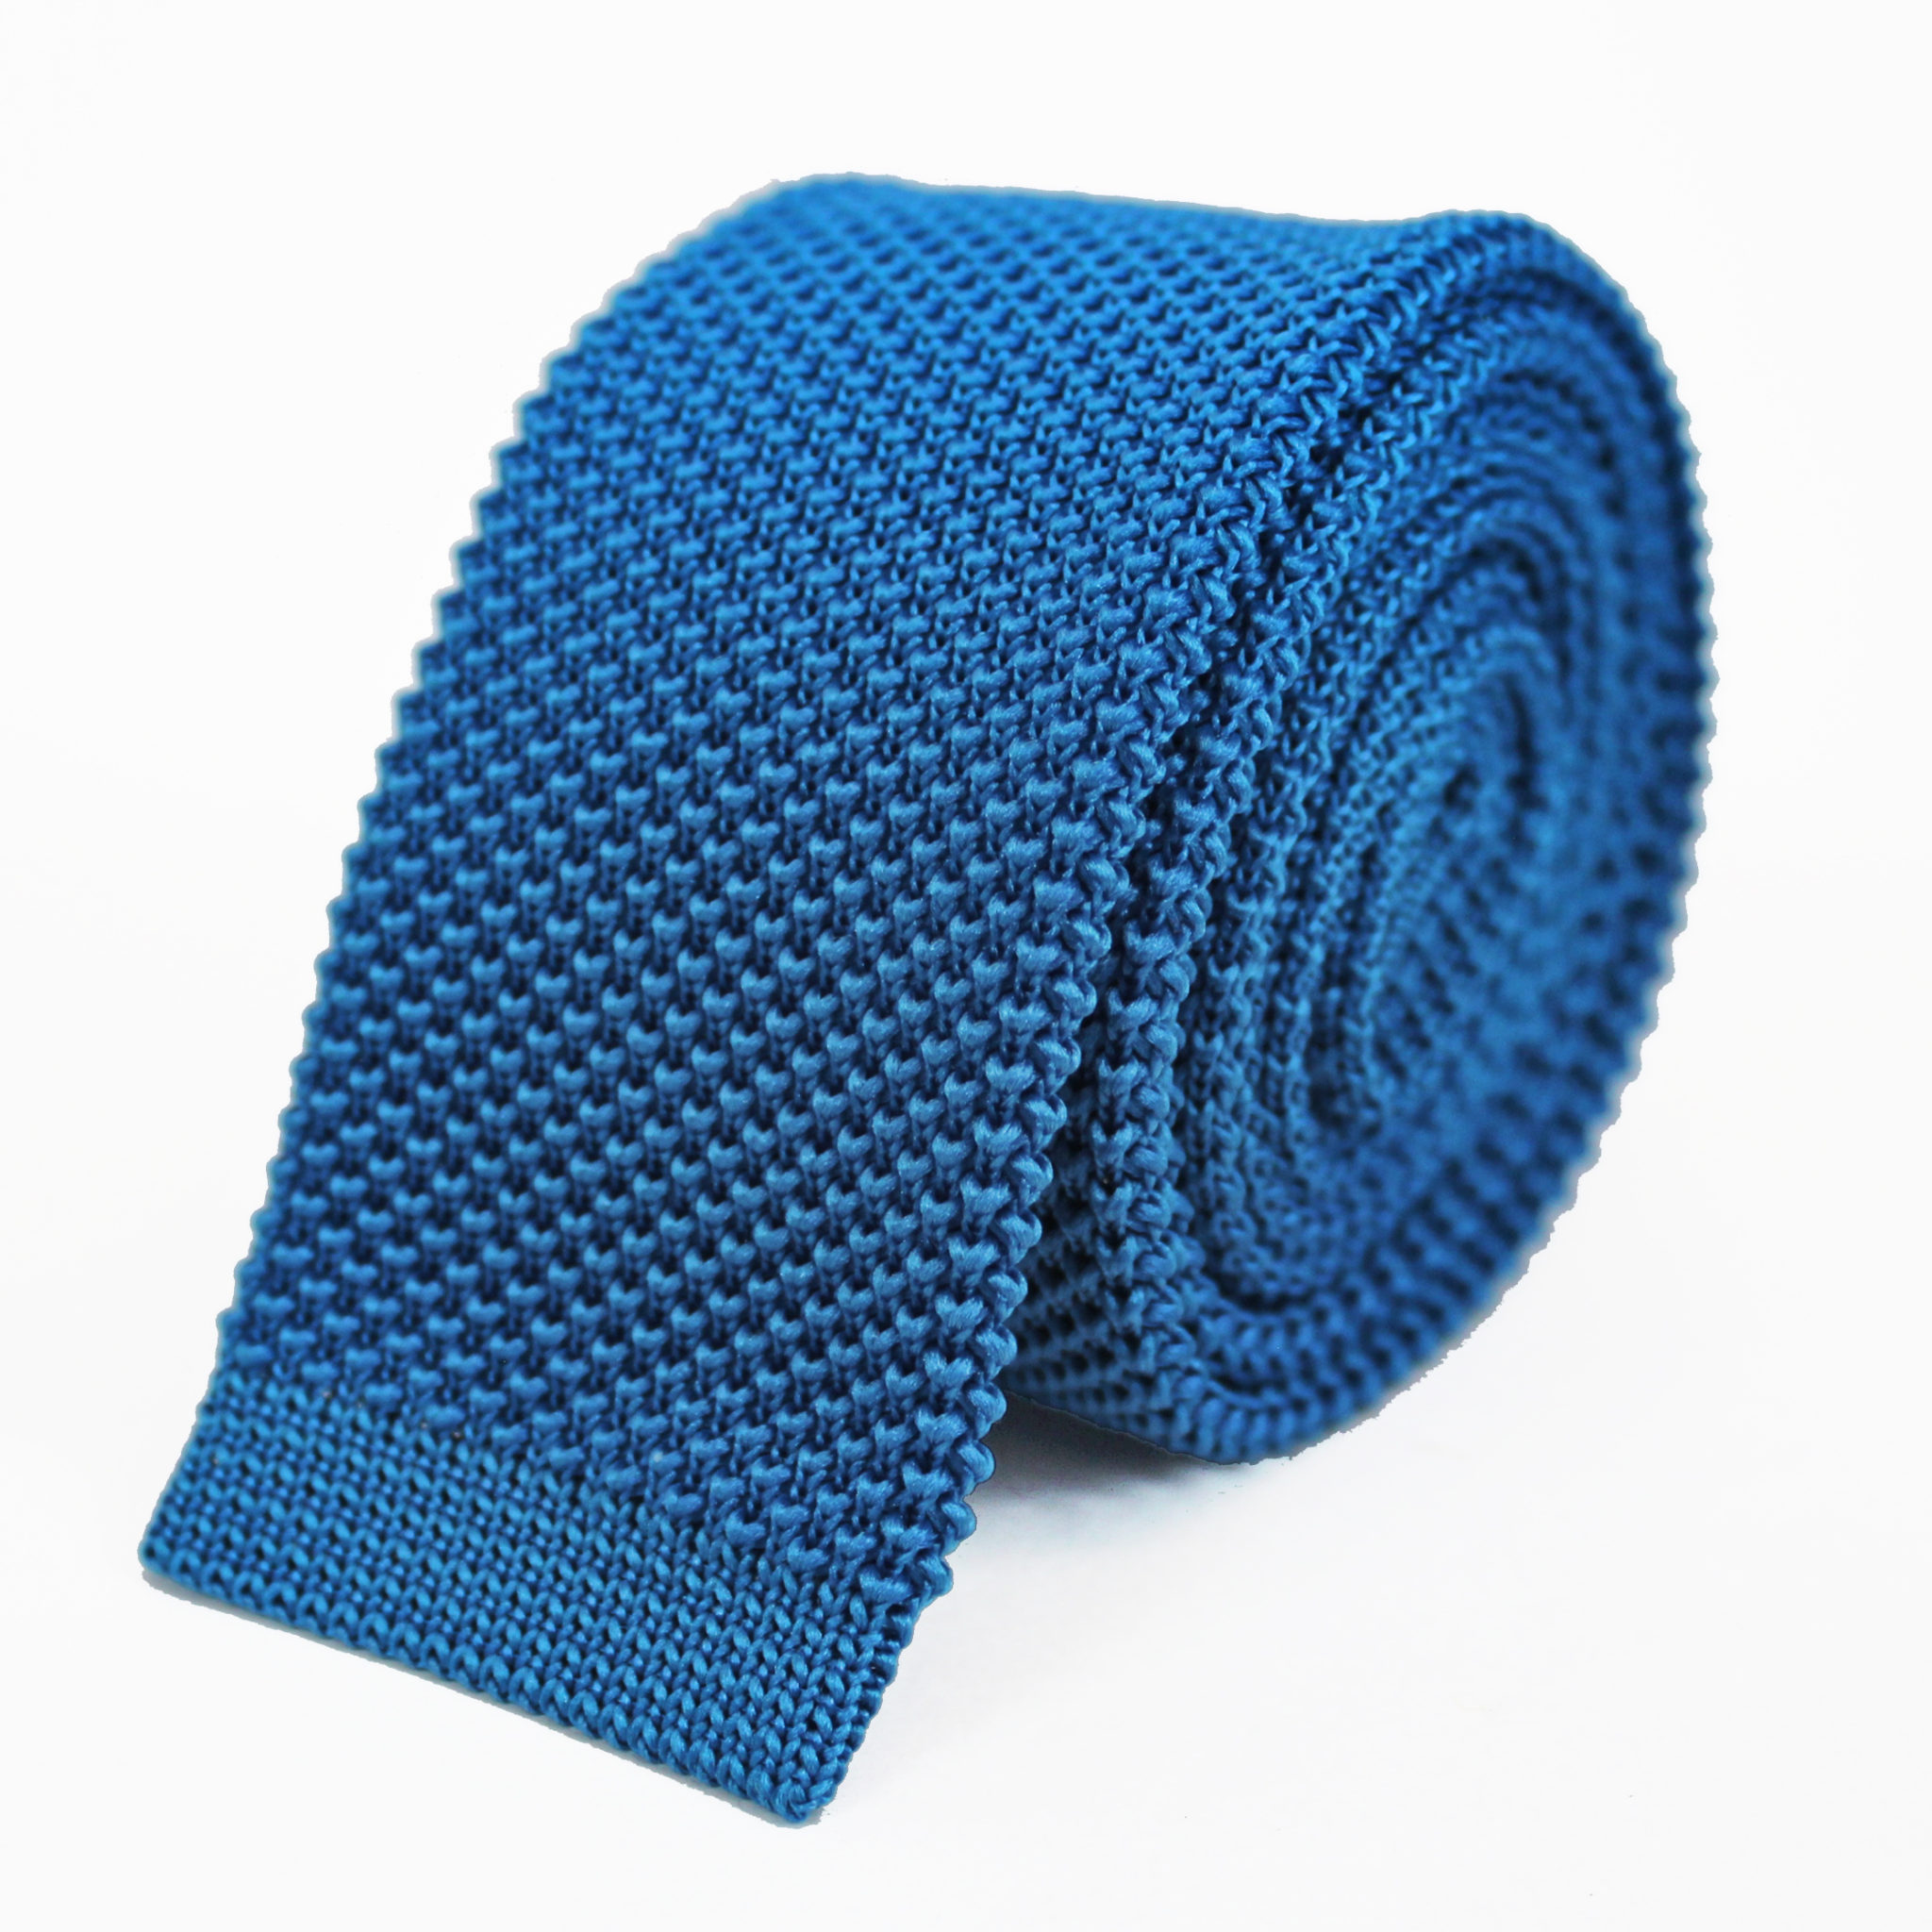 Royal Blue Knitted Tie - Jump The Gun